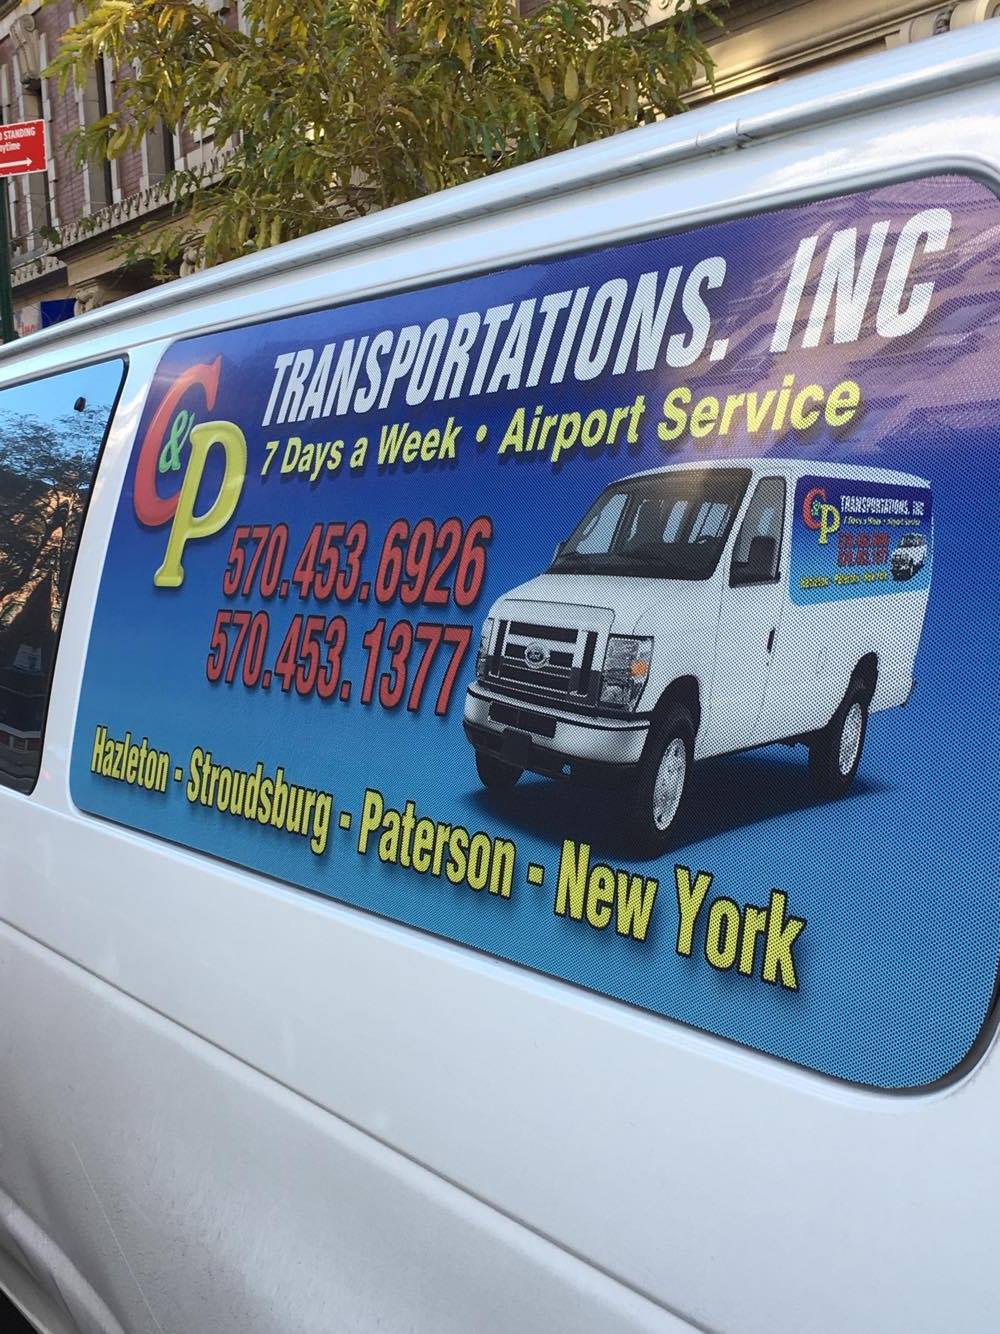 $15 van service from Pennsylvania to 